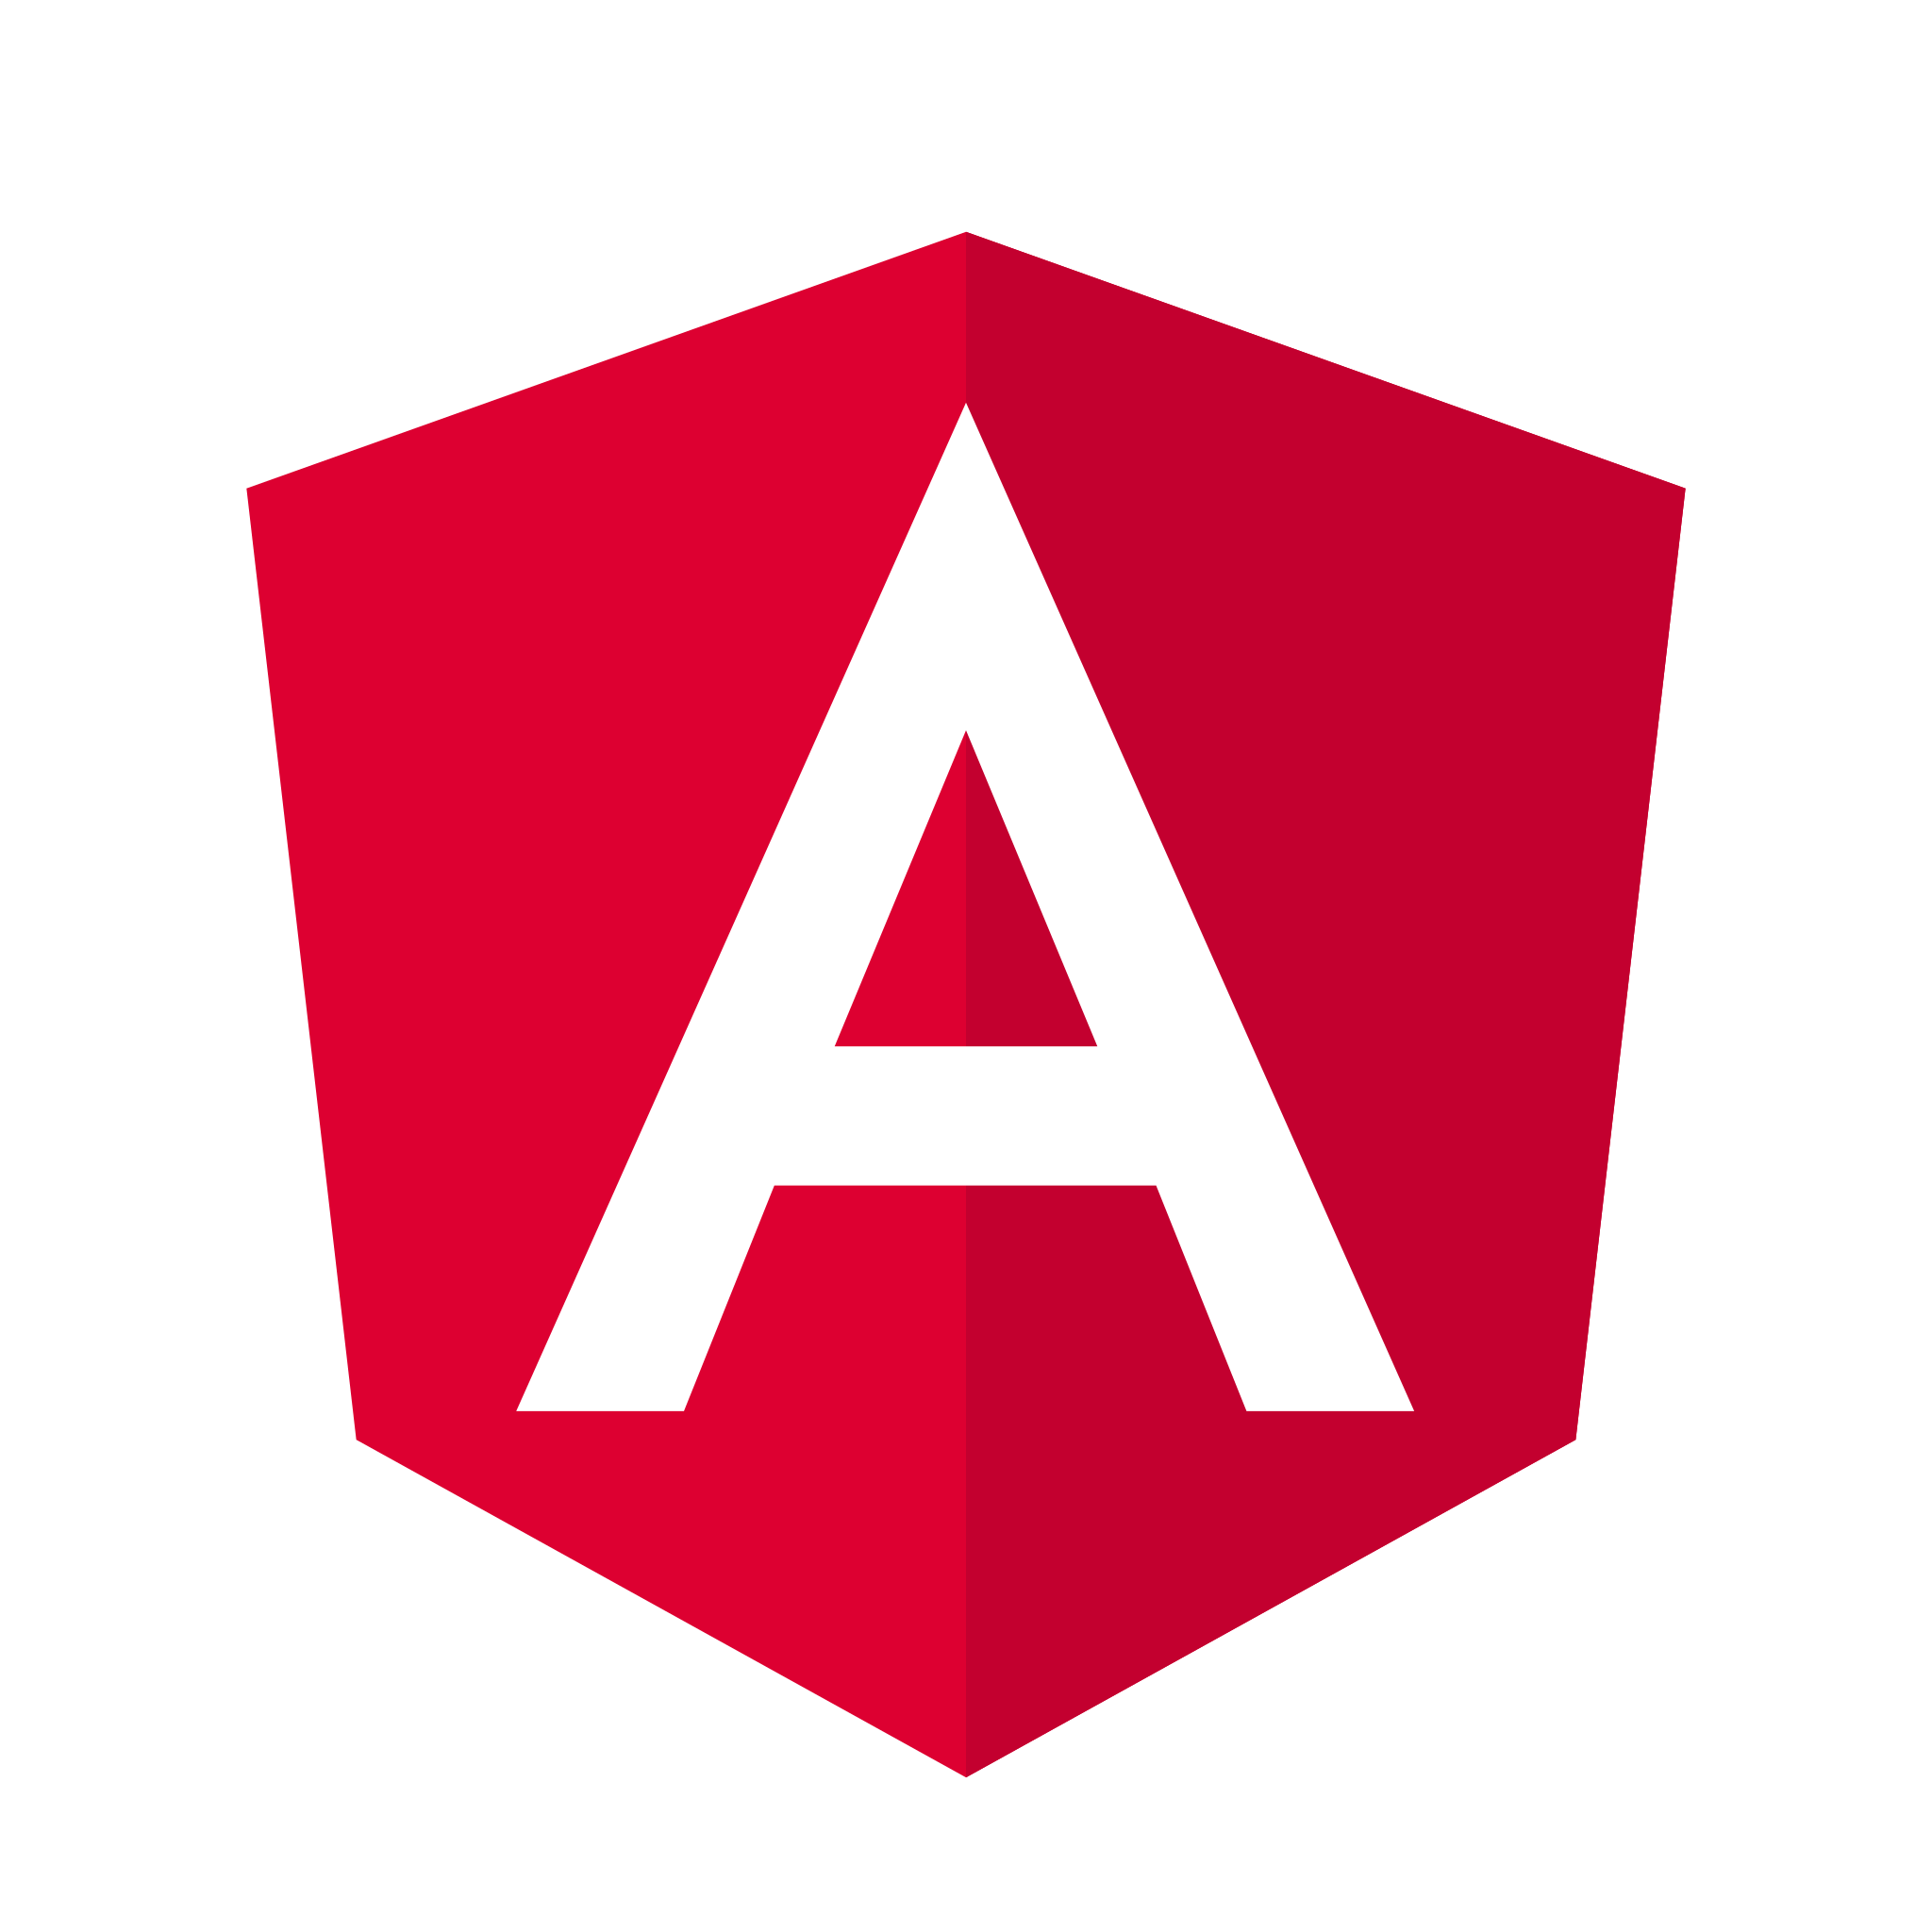 Angular_full_color_logo